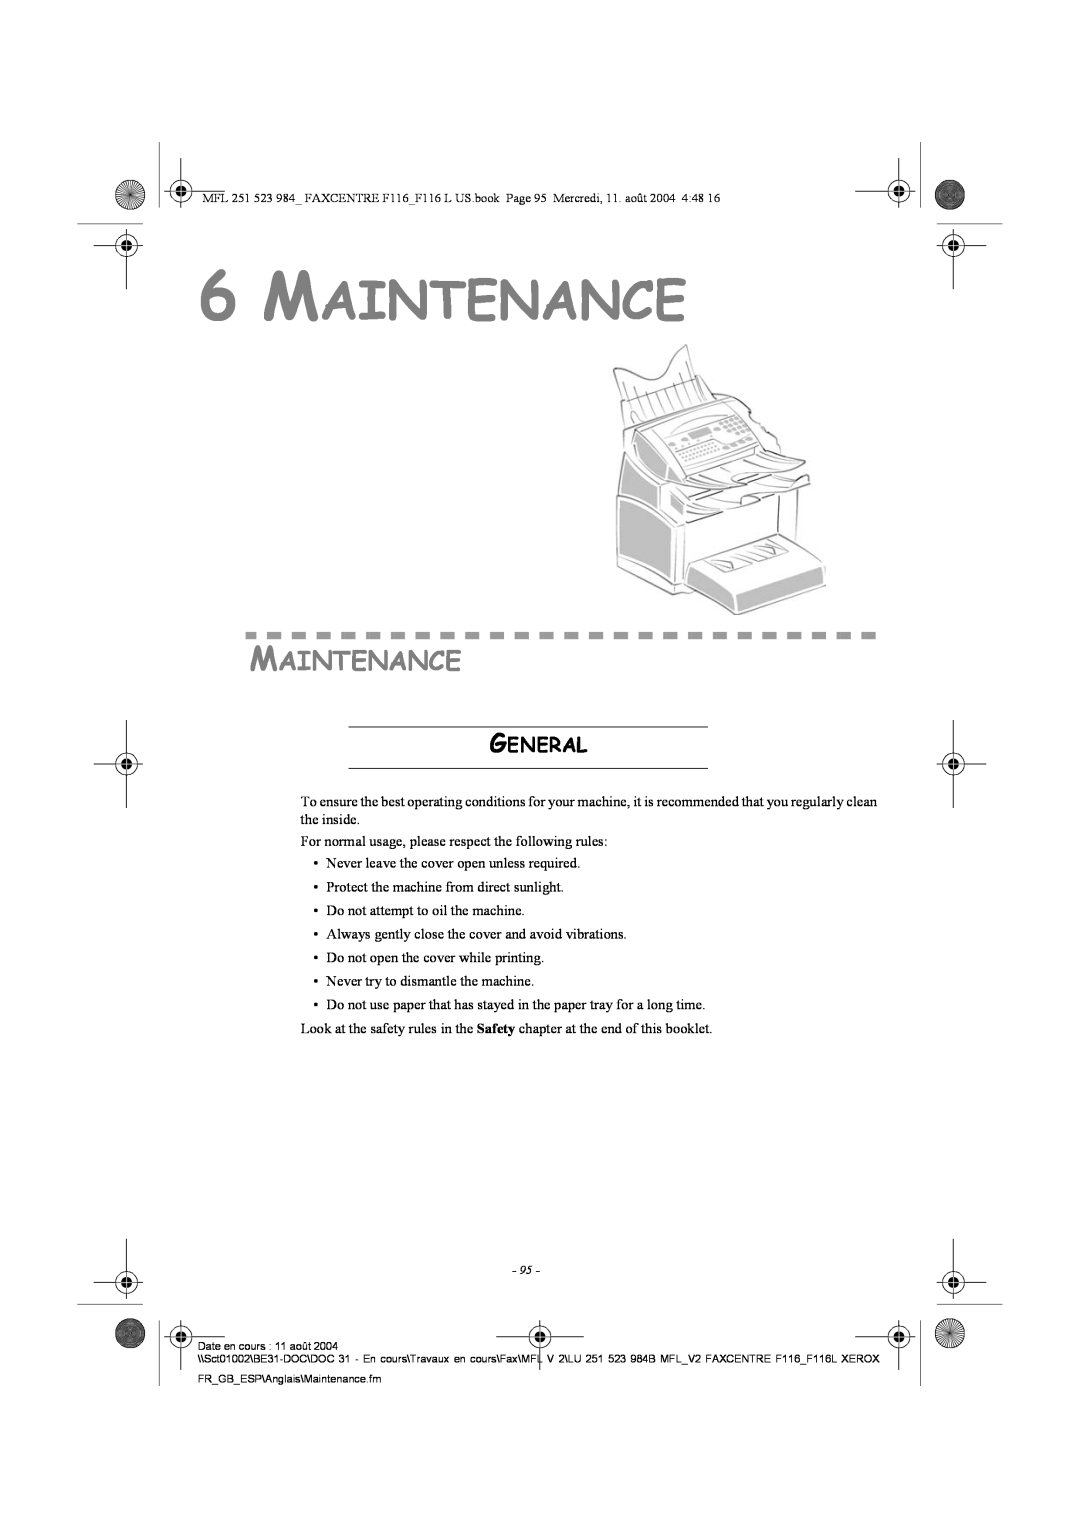 Xerox F116 user manual 6MAINTENANCE, Maintenance, General 